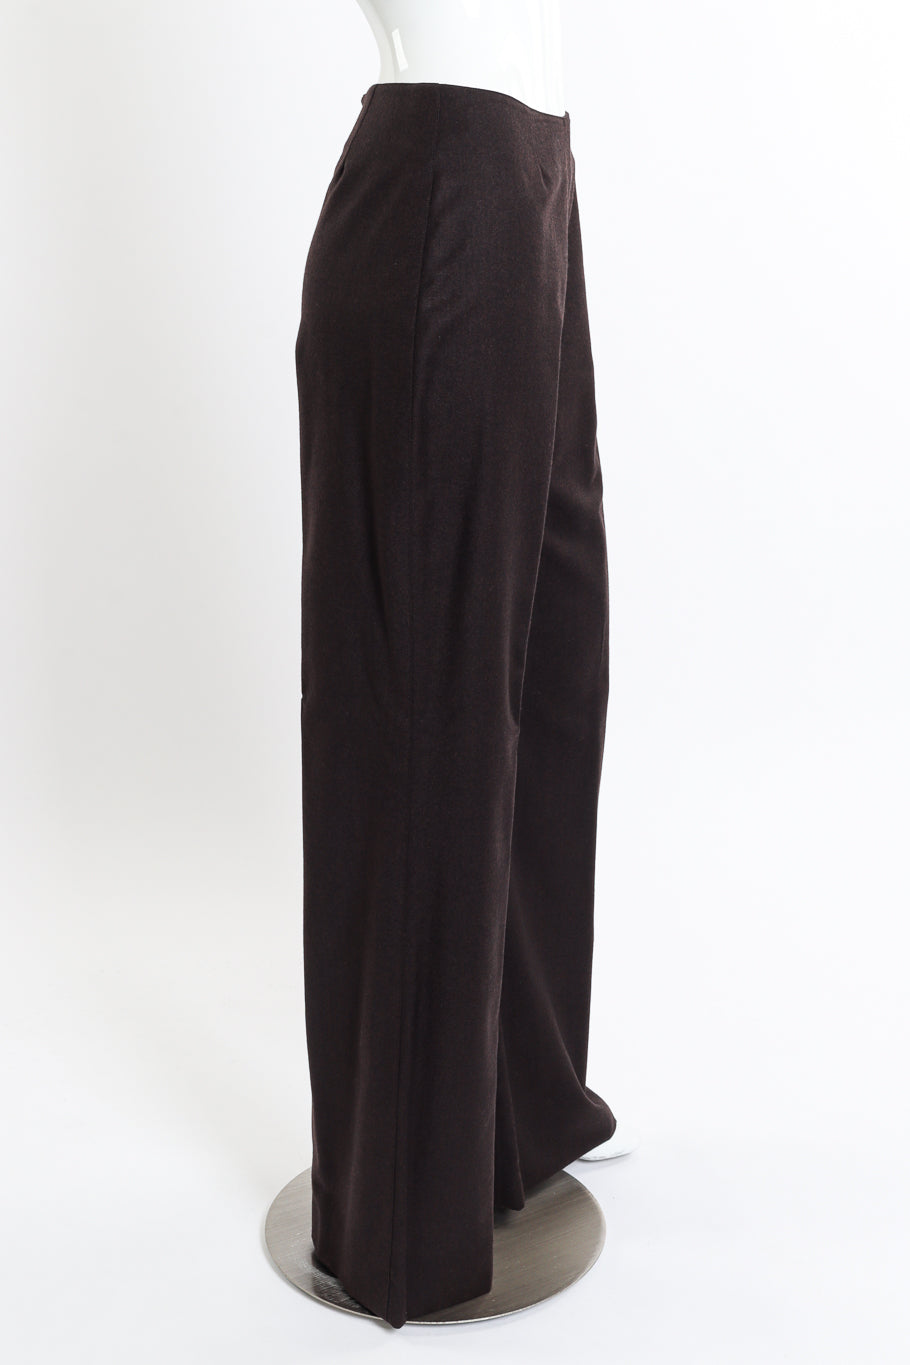 Vintage Thierry Mugler Sculpted Pantsuit side on mannequin @recessla